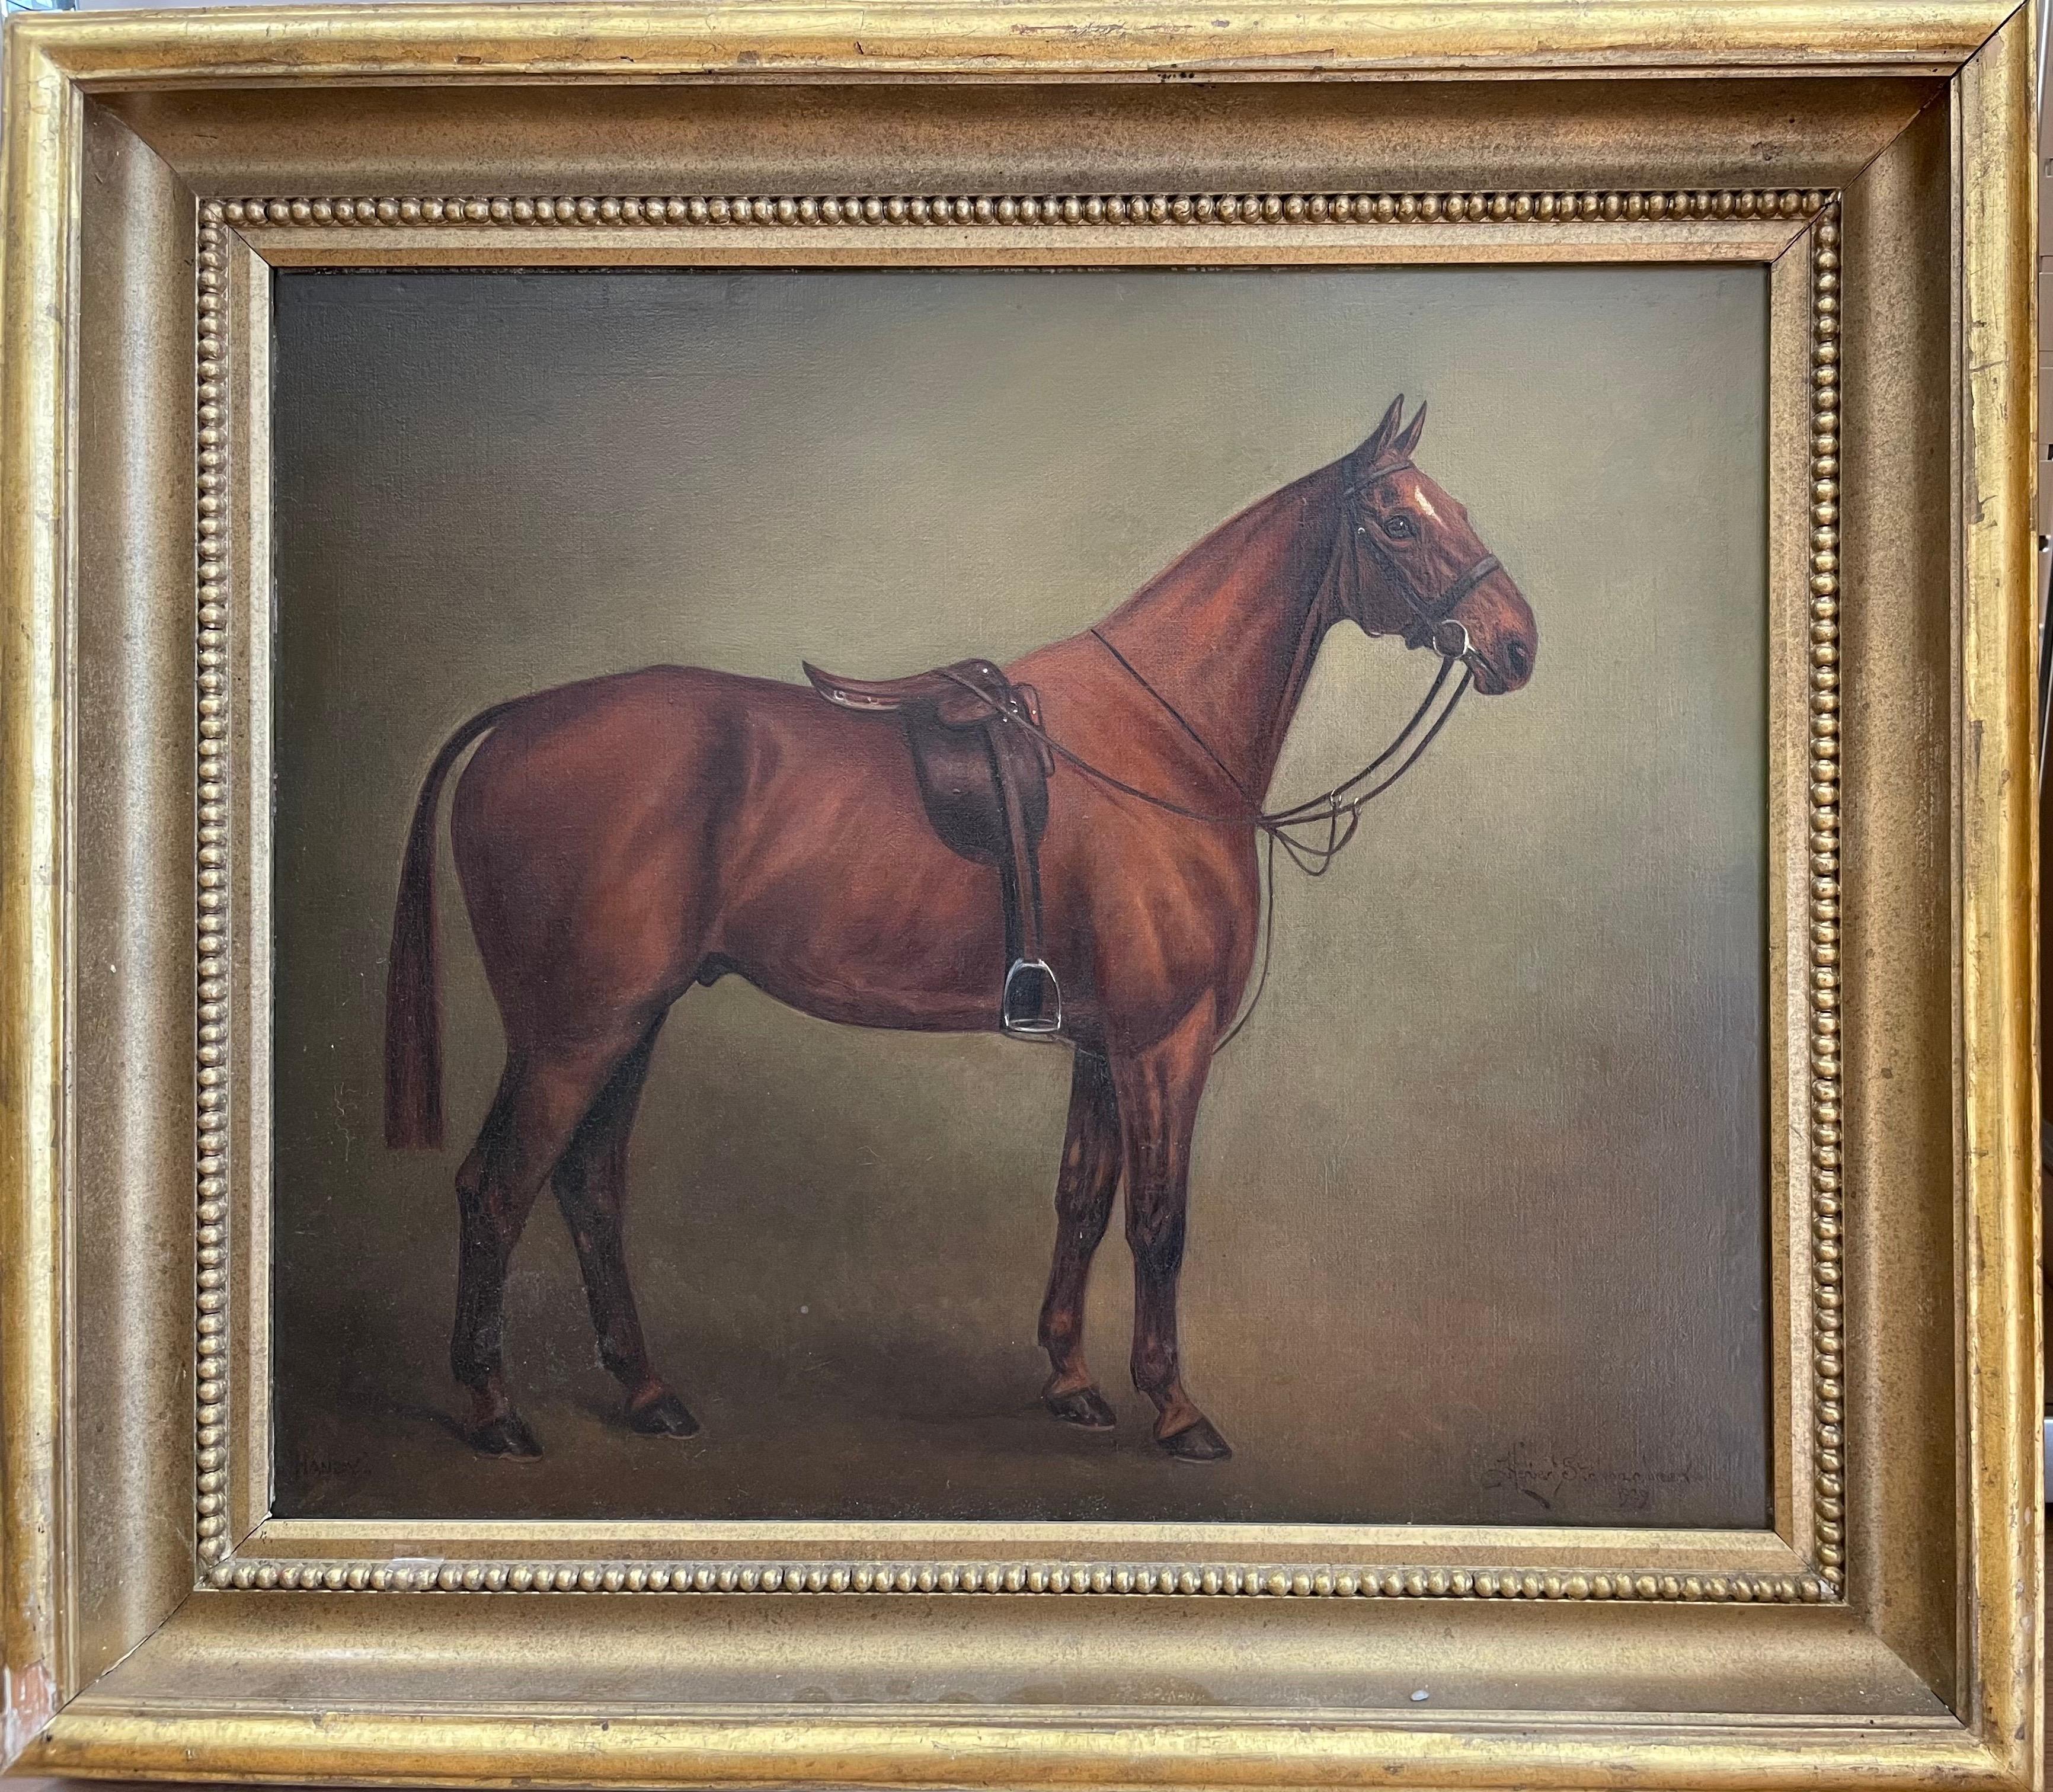 Herbert St. John Jones Interior Painting - 1920's Classic British Sporting Art Oil Painting Chestnut Horse in Stable 